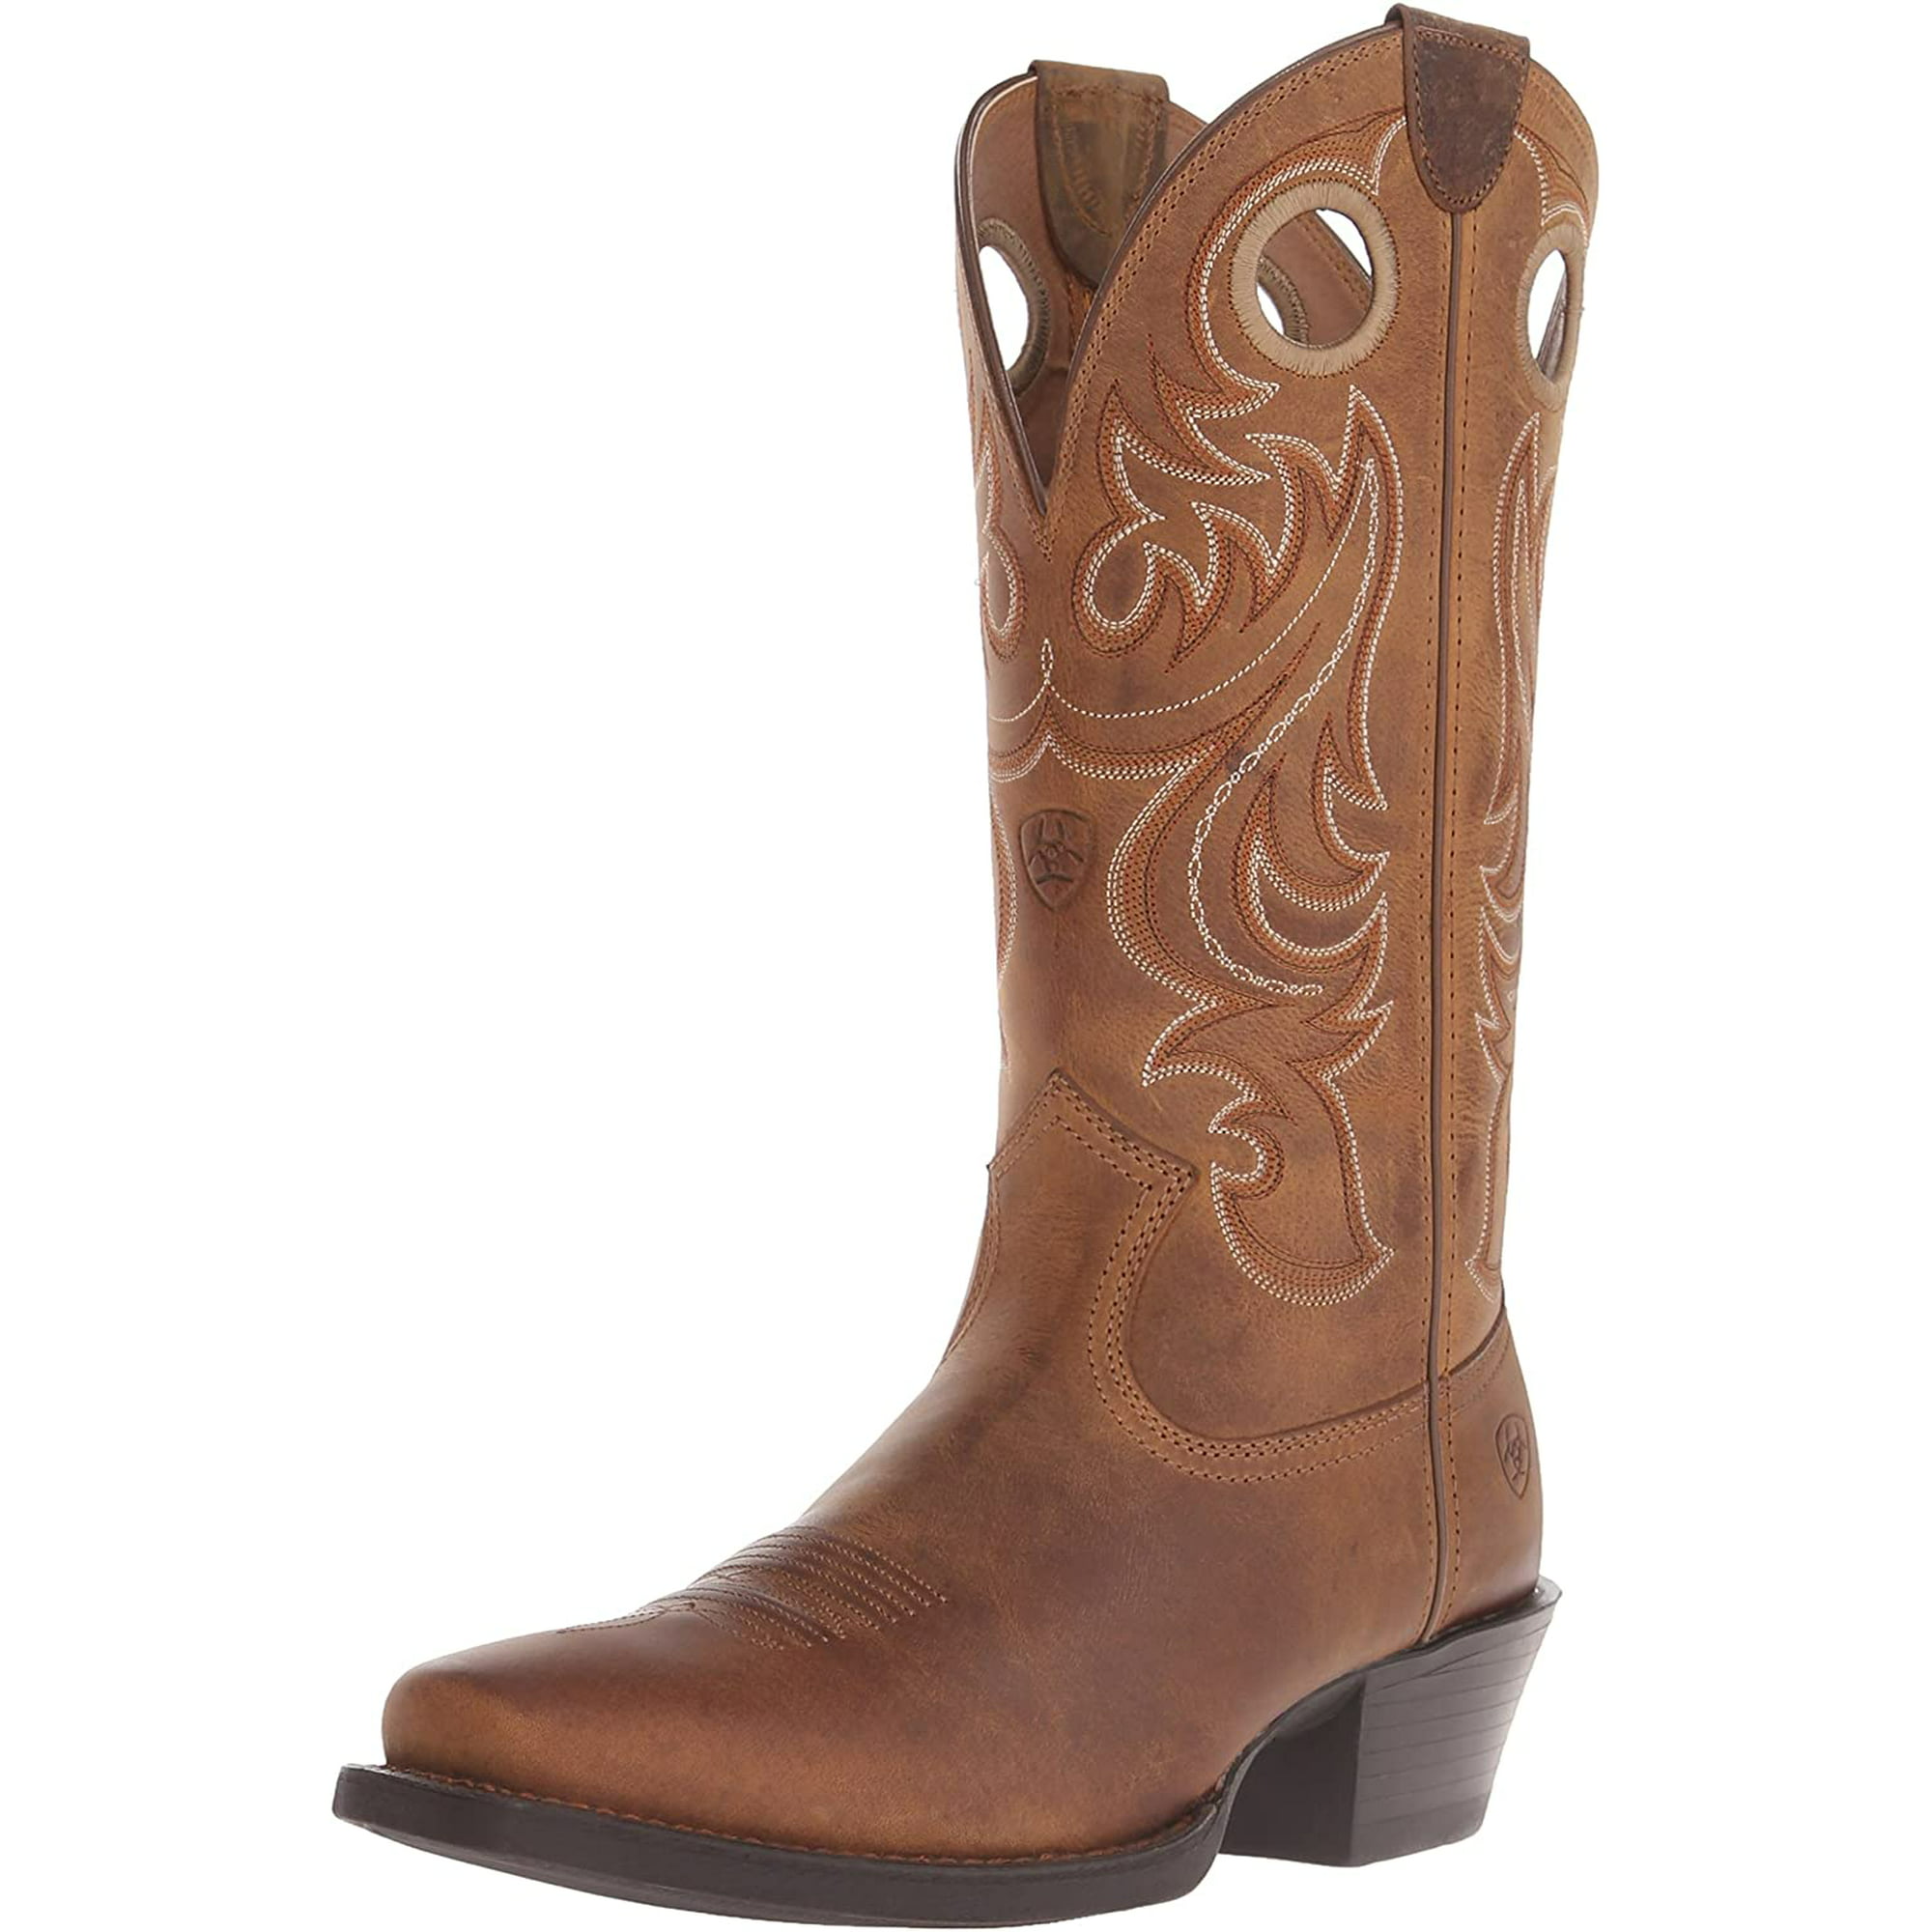 Ariat Men's Sport Square Toe Western Cowboy Boot, Powder Brown, 7 D US |  Walmart Canada